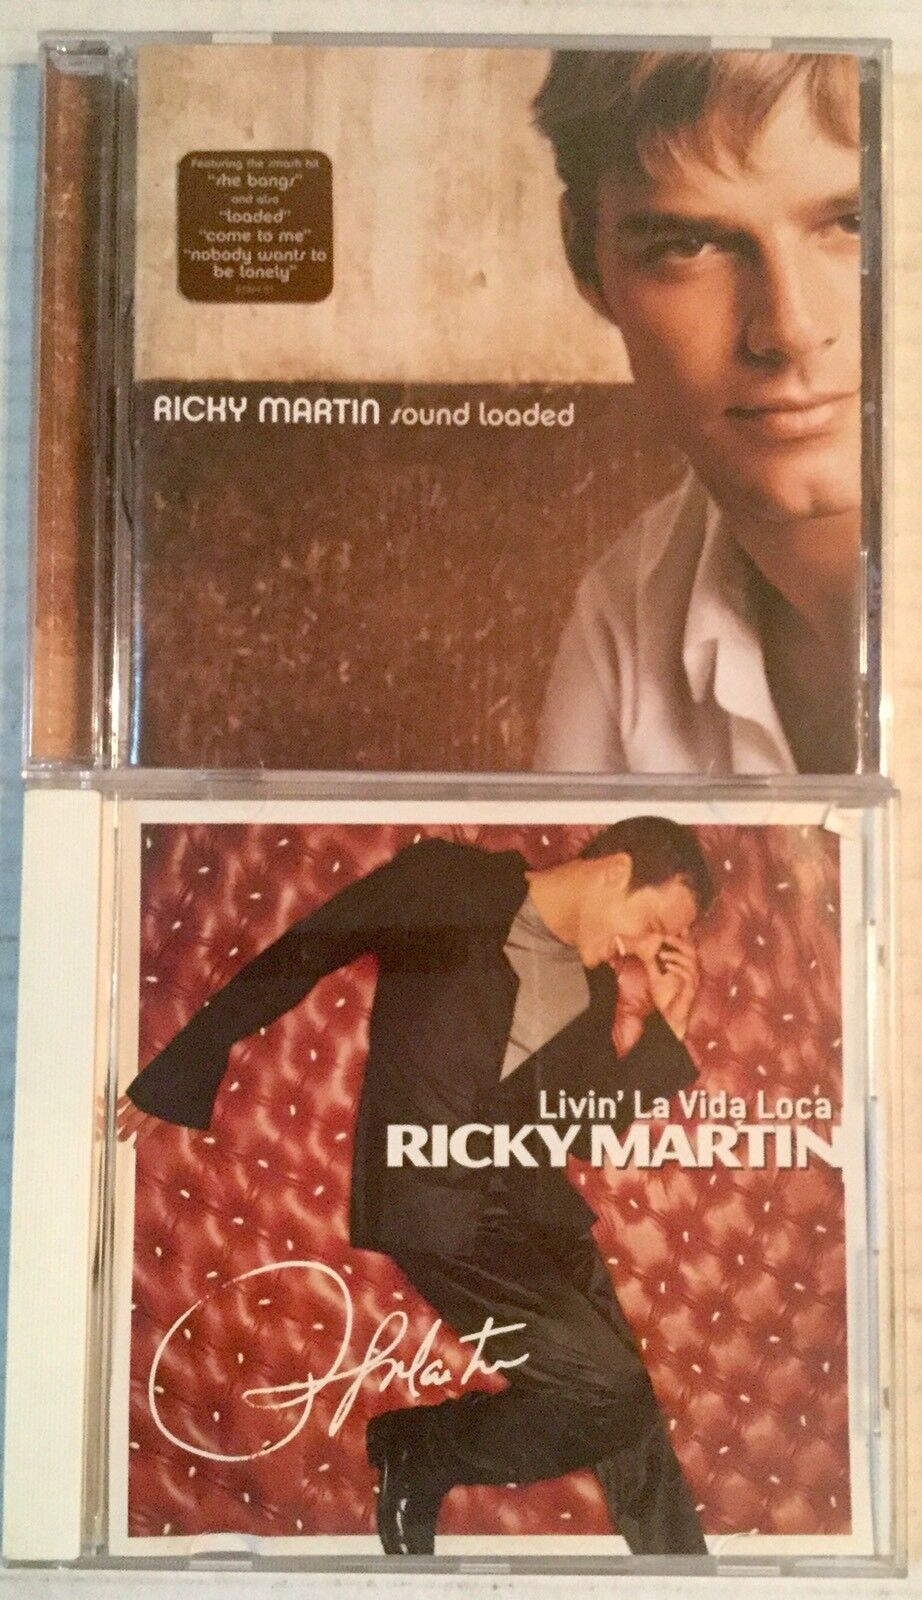 Ricky Martin 2 CD Lot Livin’  La Vida Loca  Sound Loaded